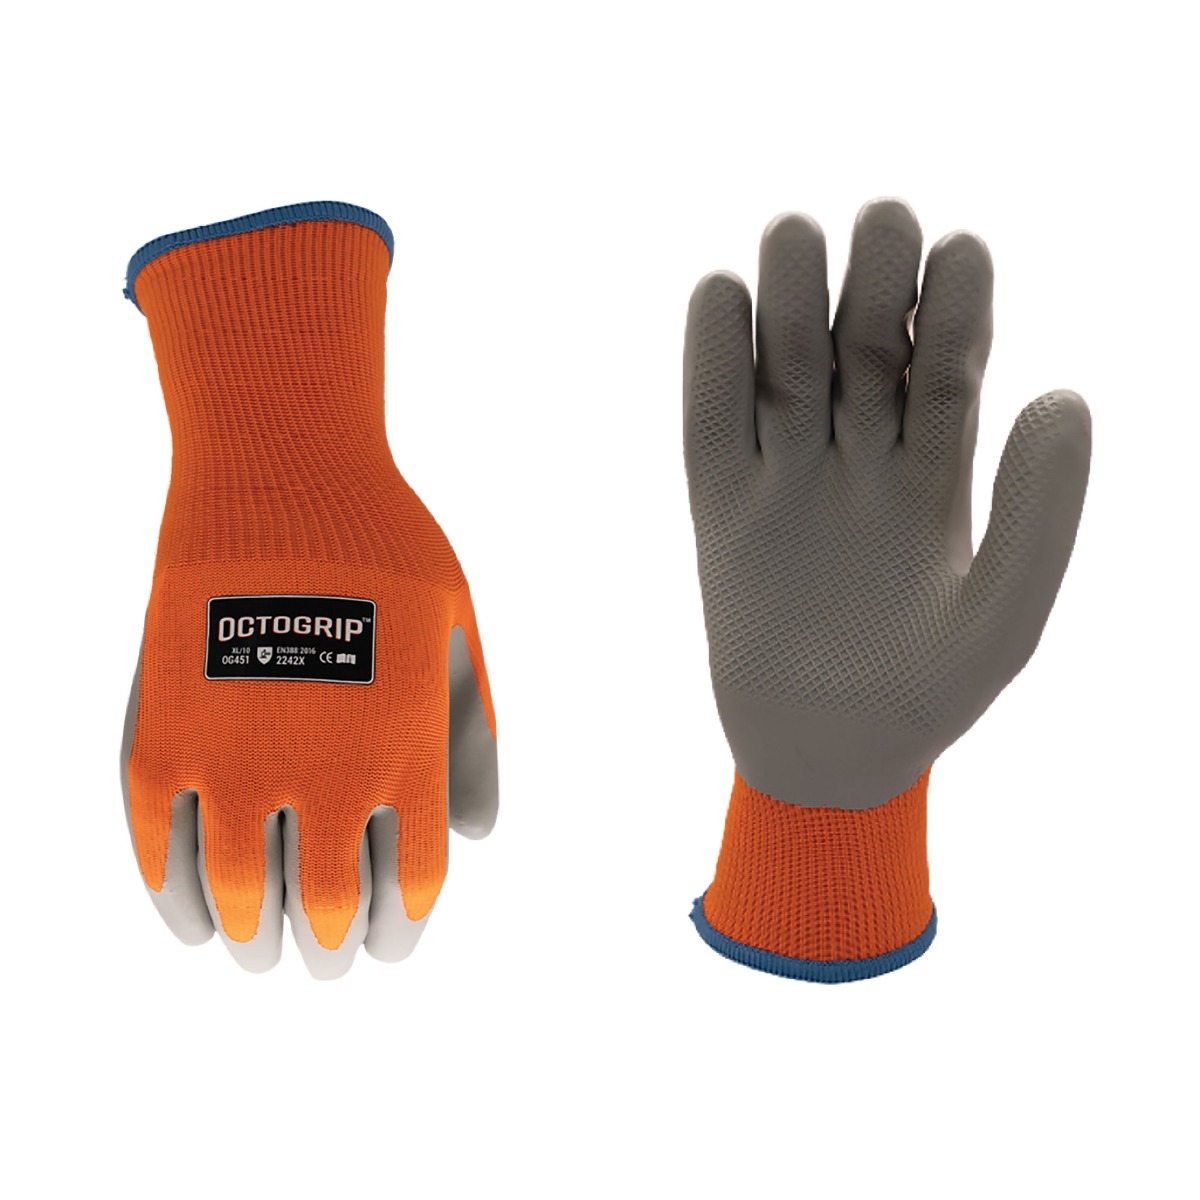 Cold Weather Winter Series Glove 10g - Size XL